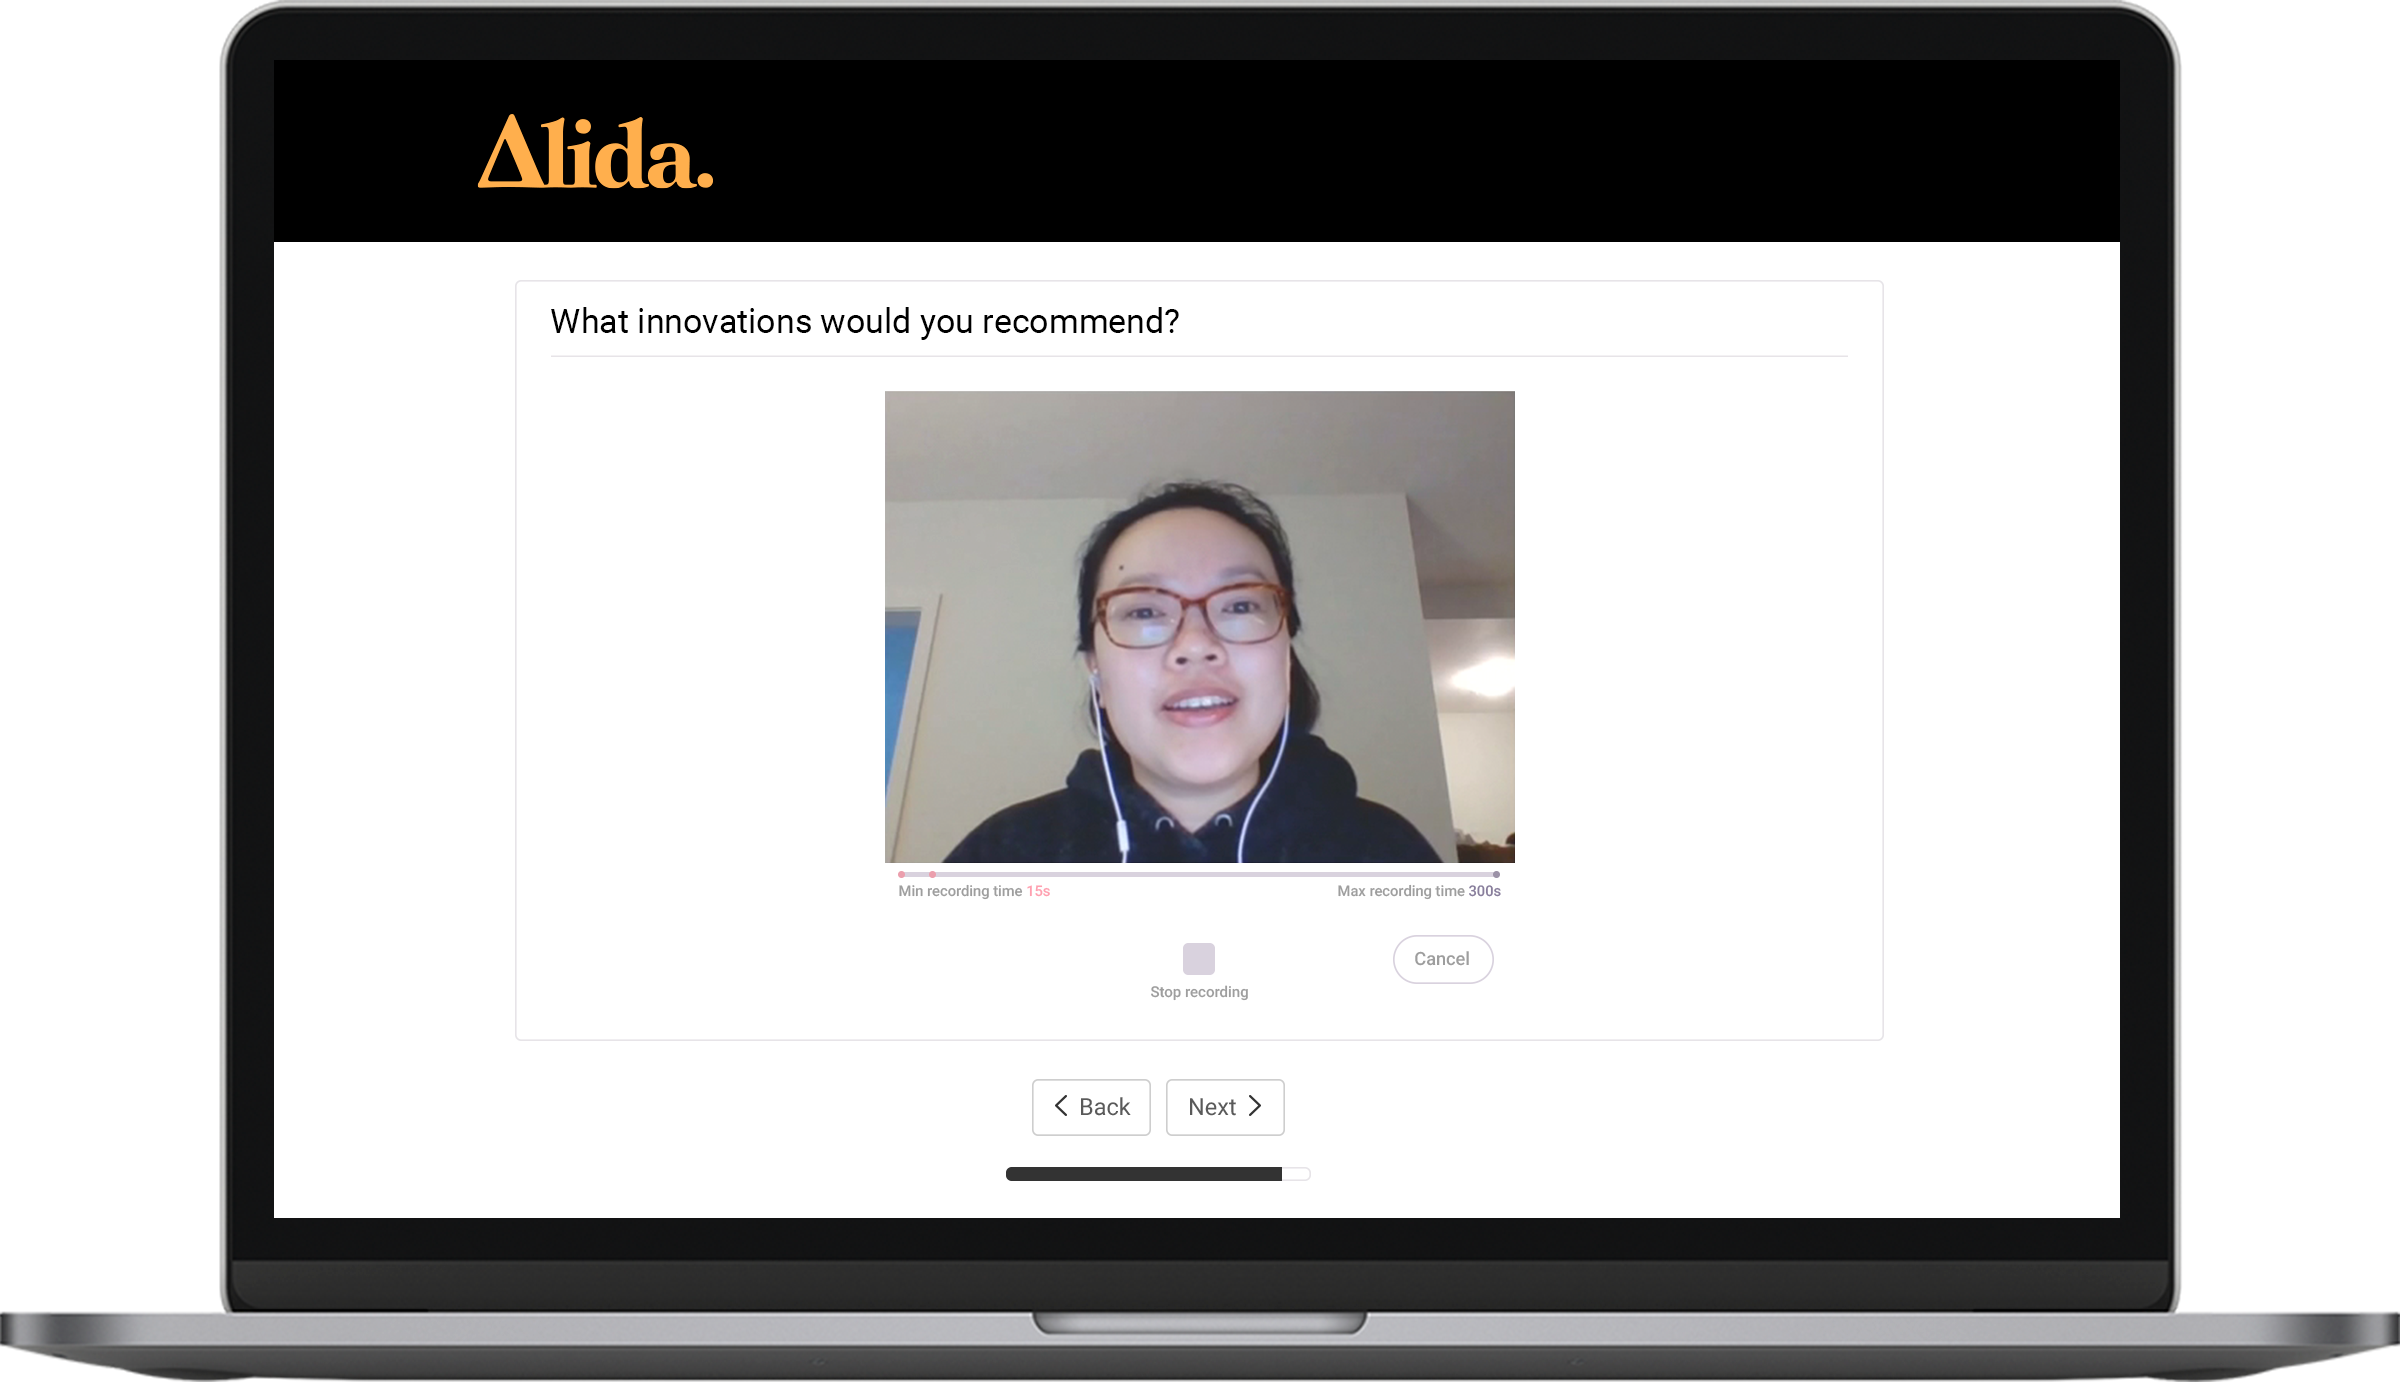 alida-product-shot-video-feedback-question-desktop